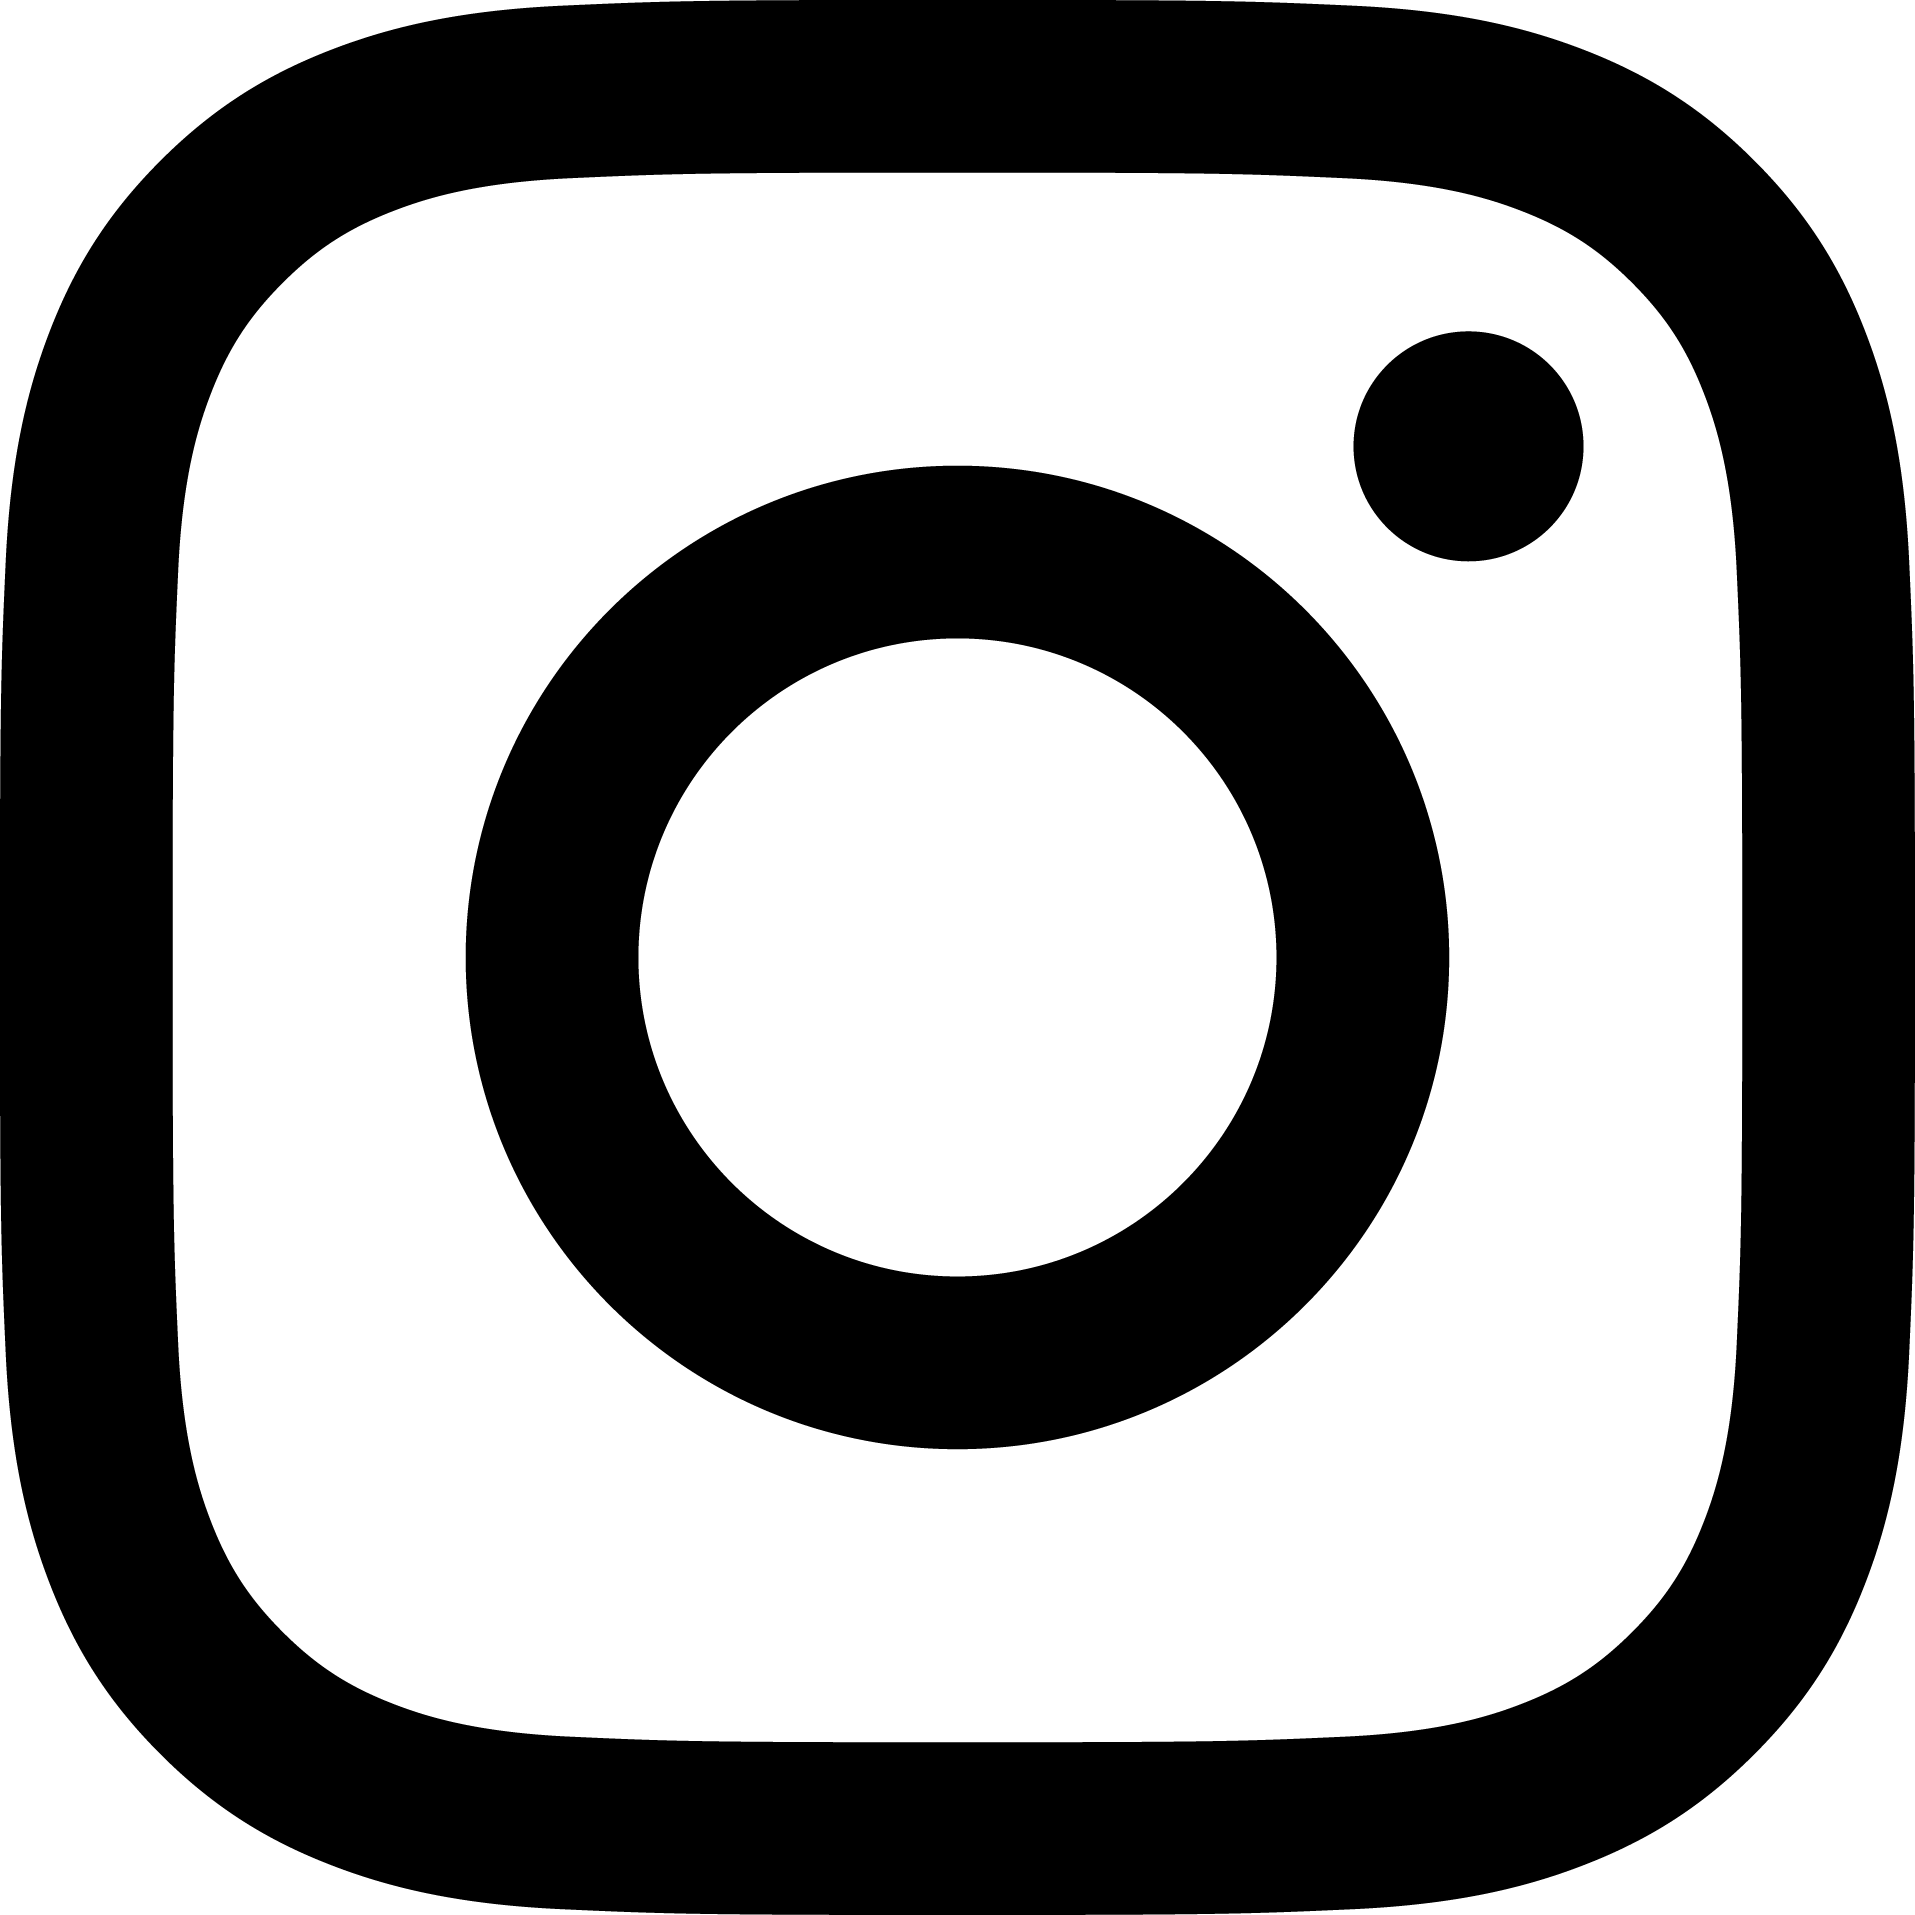 Instagram logo download vector - gaistereo